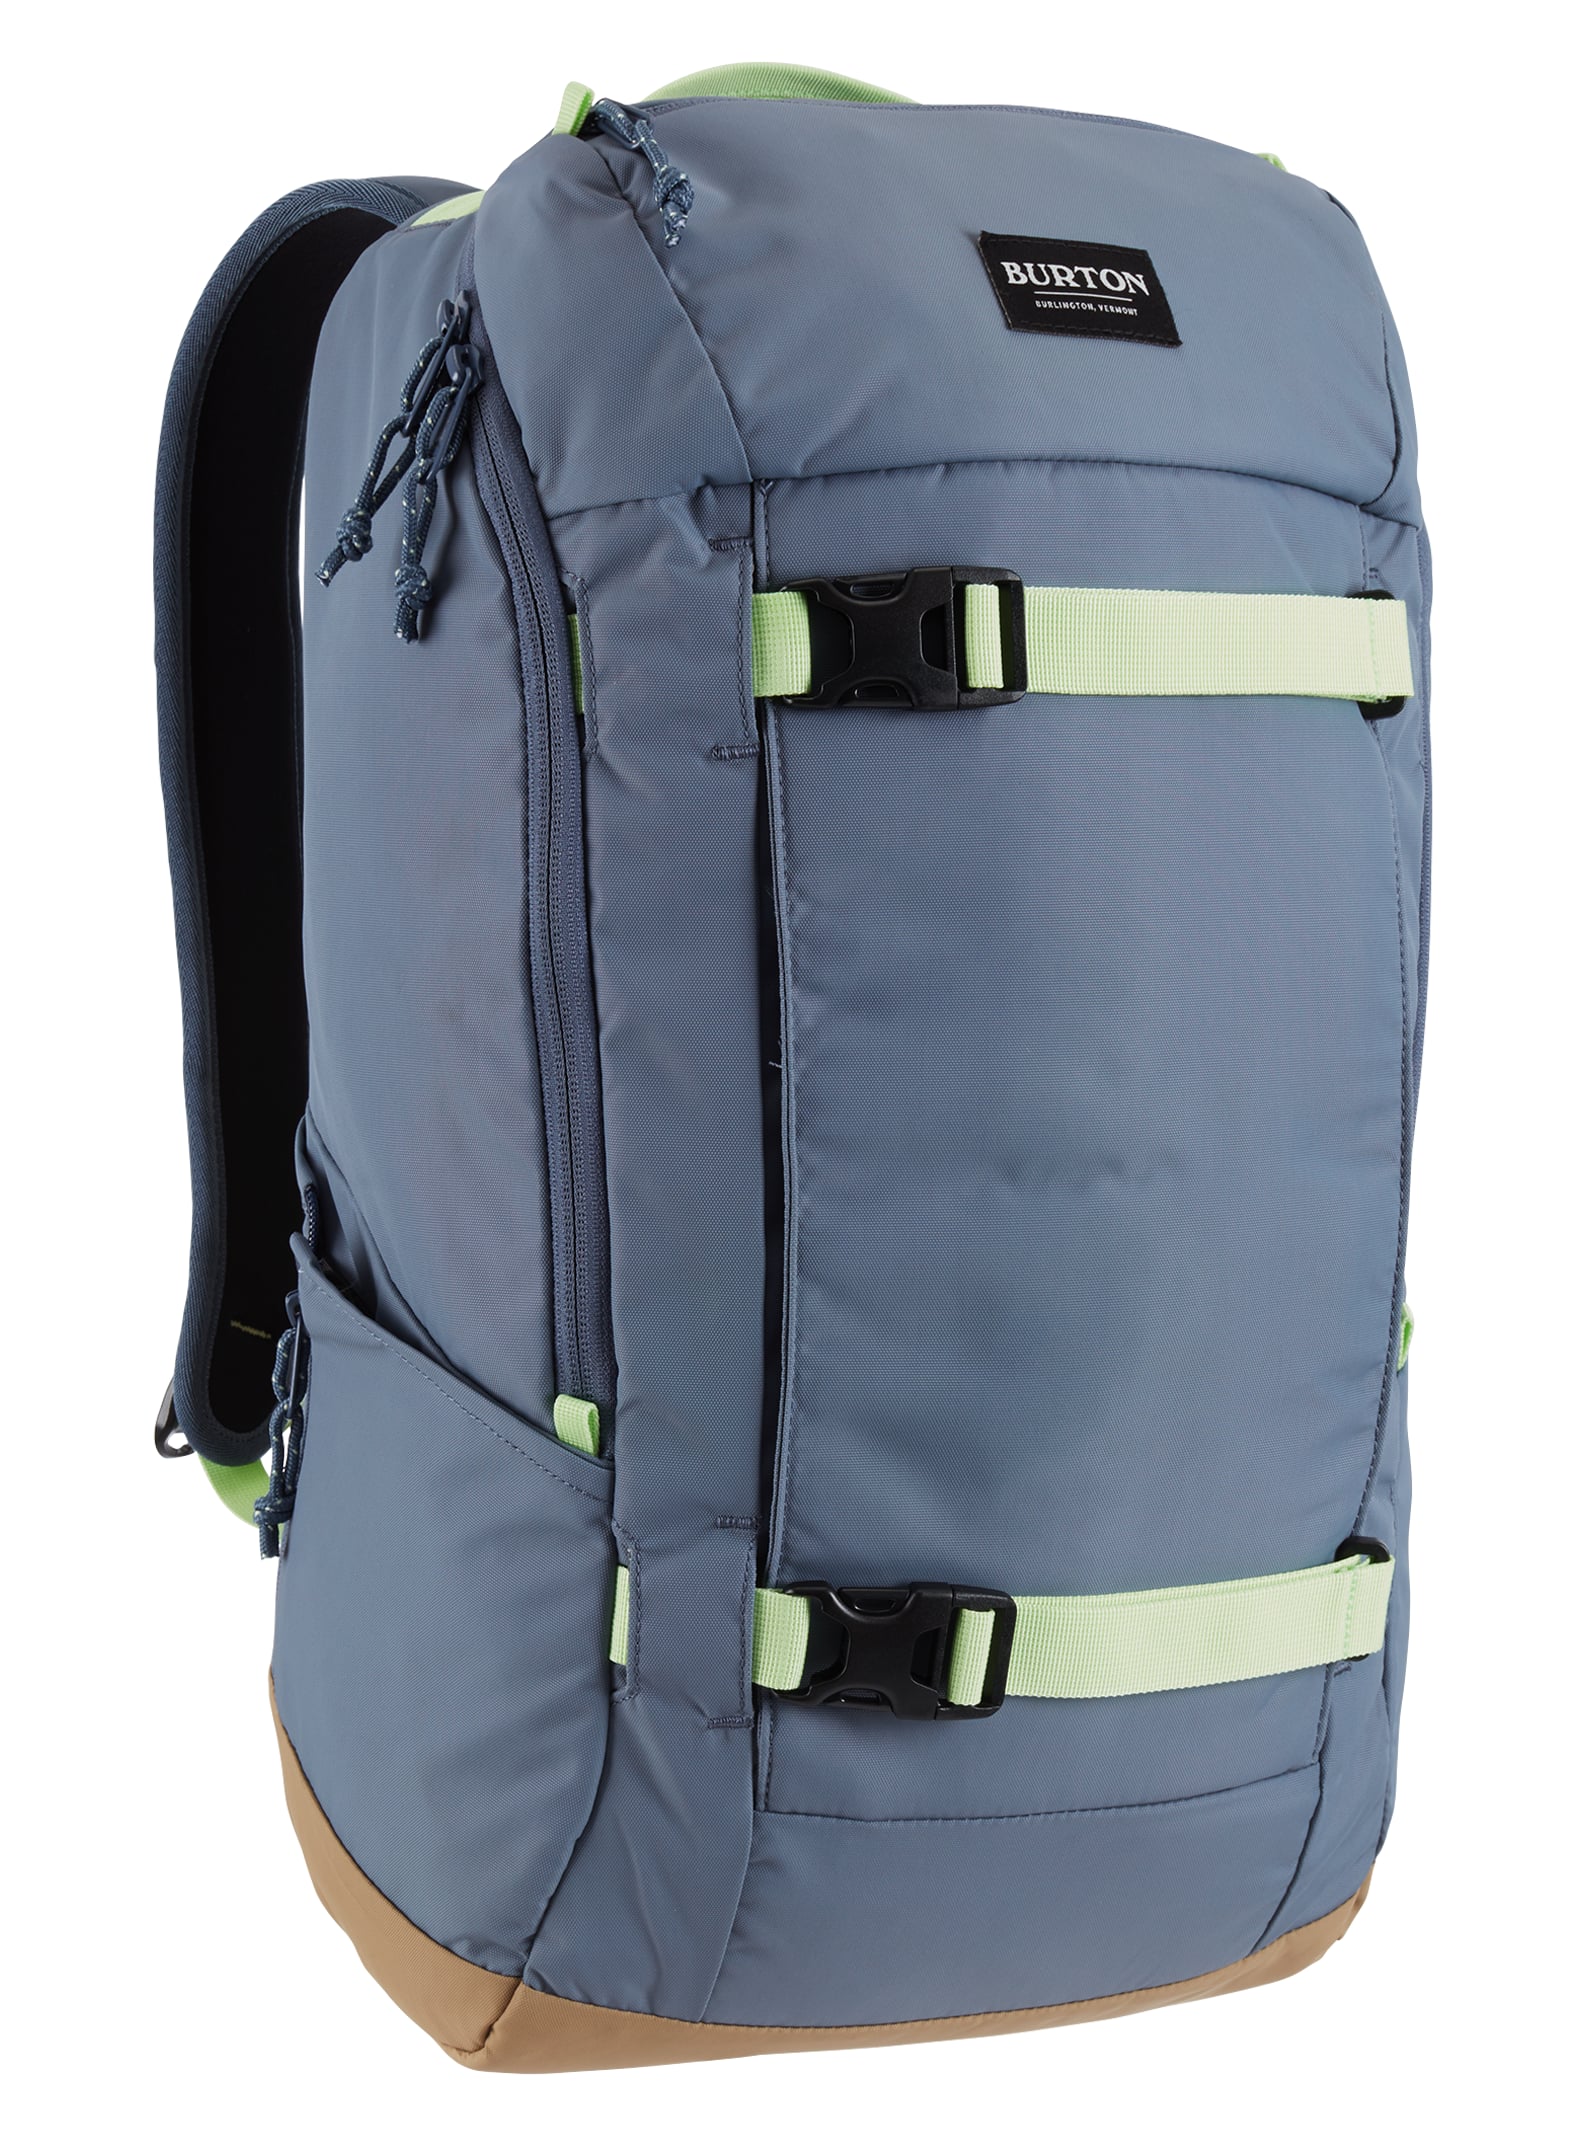 Backpacks | Burton Snowboards NO